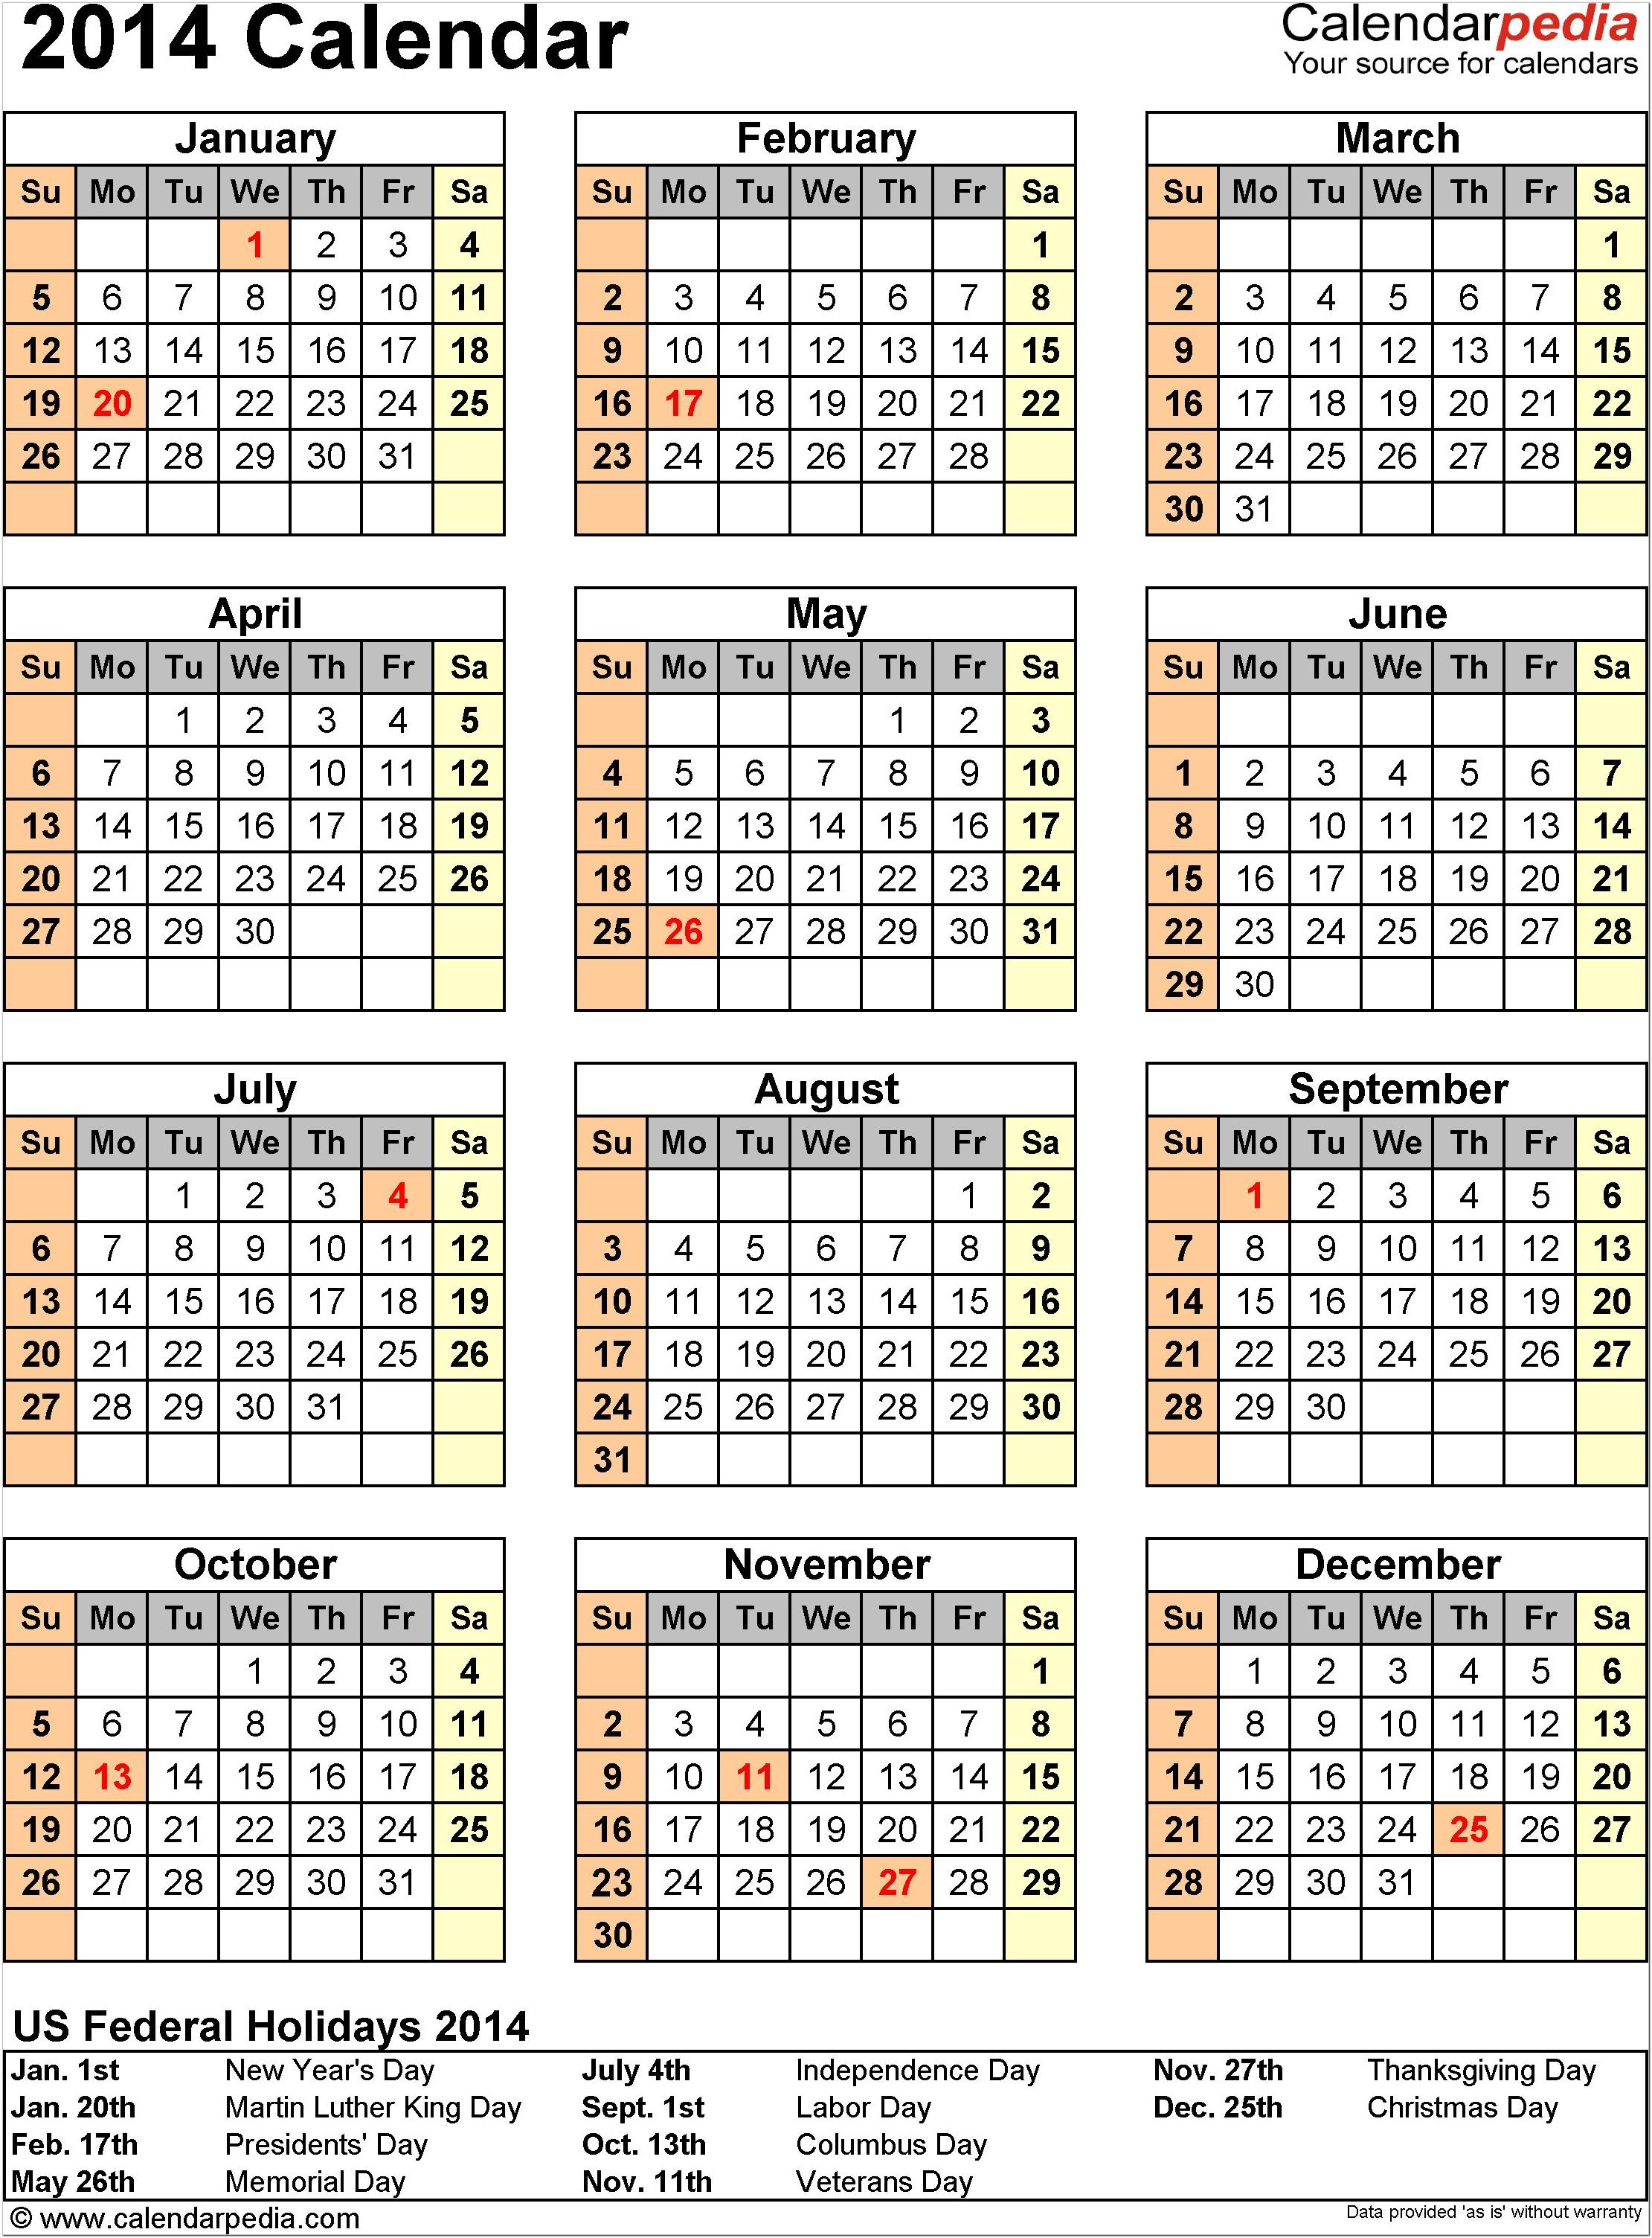 Biweekly Payroll Calendar Template 2014